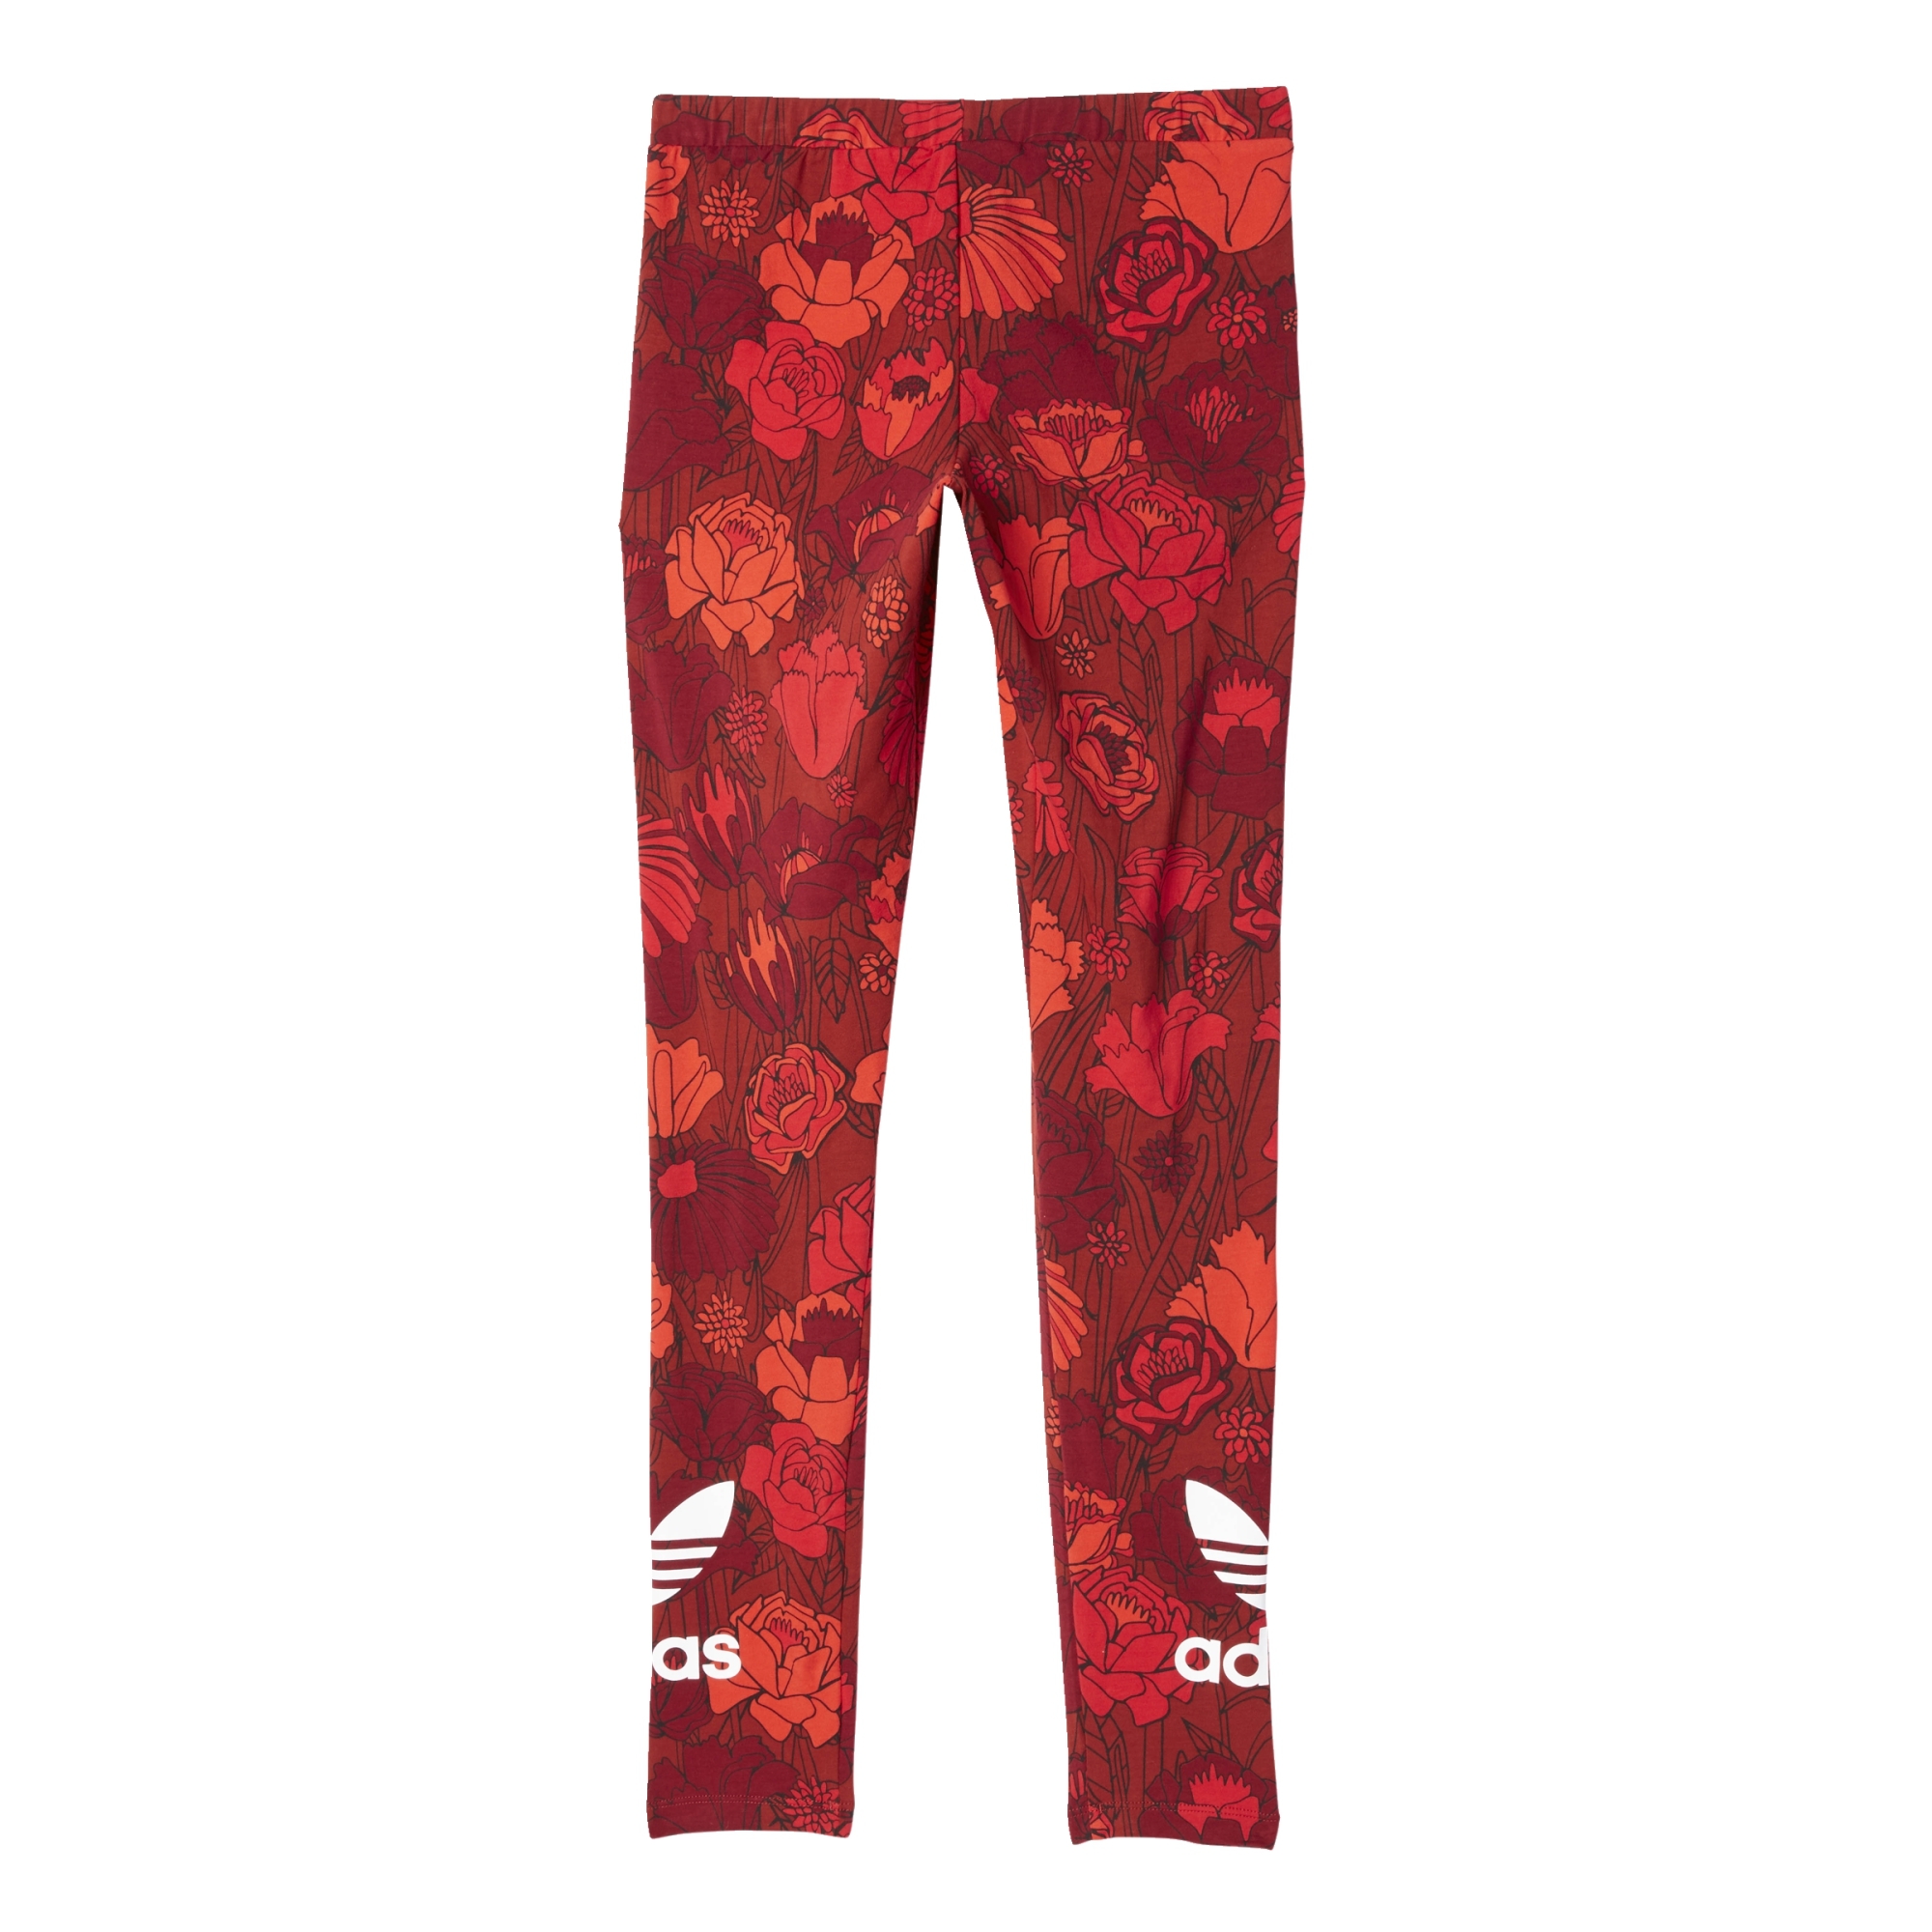 Personas mayores Específicamente Peligro Adidas Originals W Mallas Trefoil "Floral Print" (rust red/white